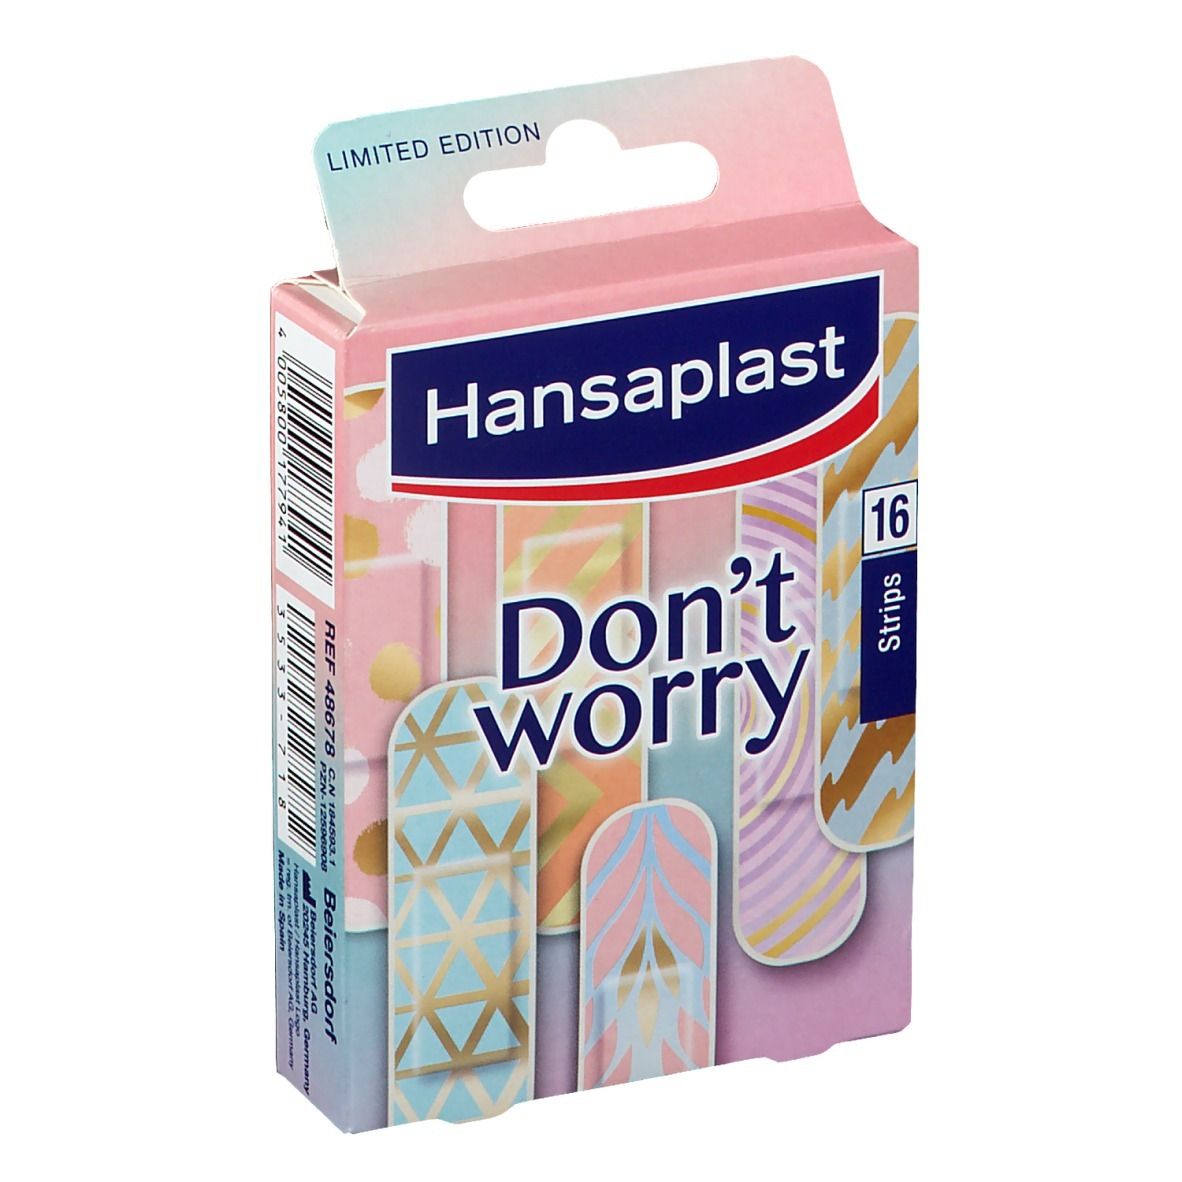 Hansaplast Don't Worry